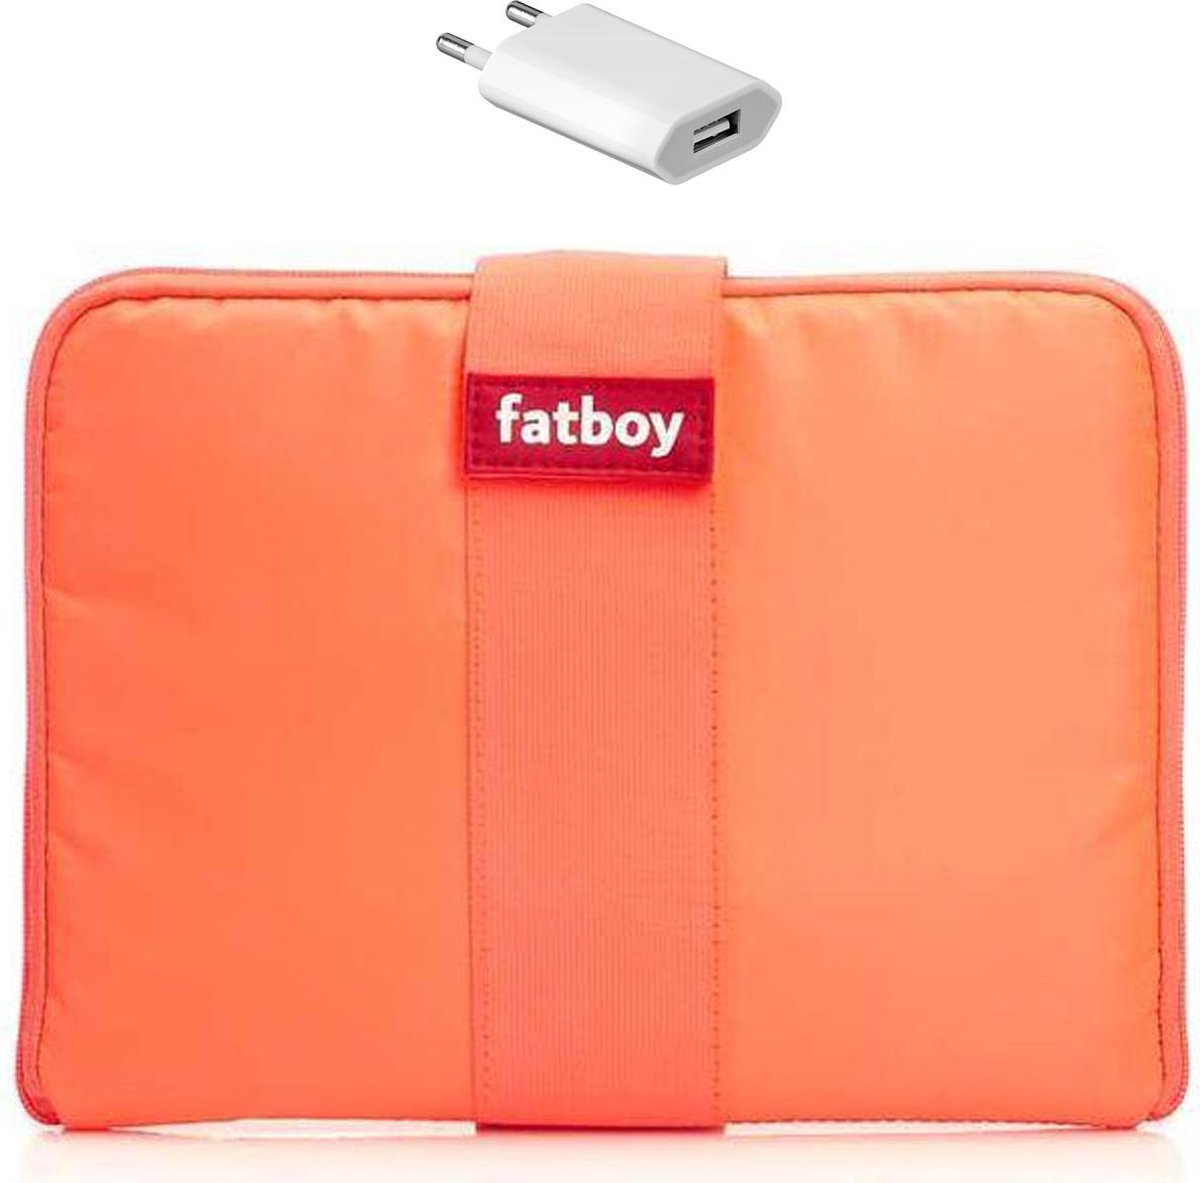 Fatboy – tablet hoes – Fatboy tuxedo oranje – inclusief - USB stekker - 28,5 cm x 22 cm – hoes tablet